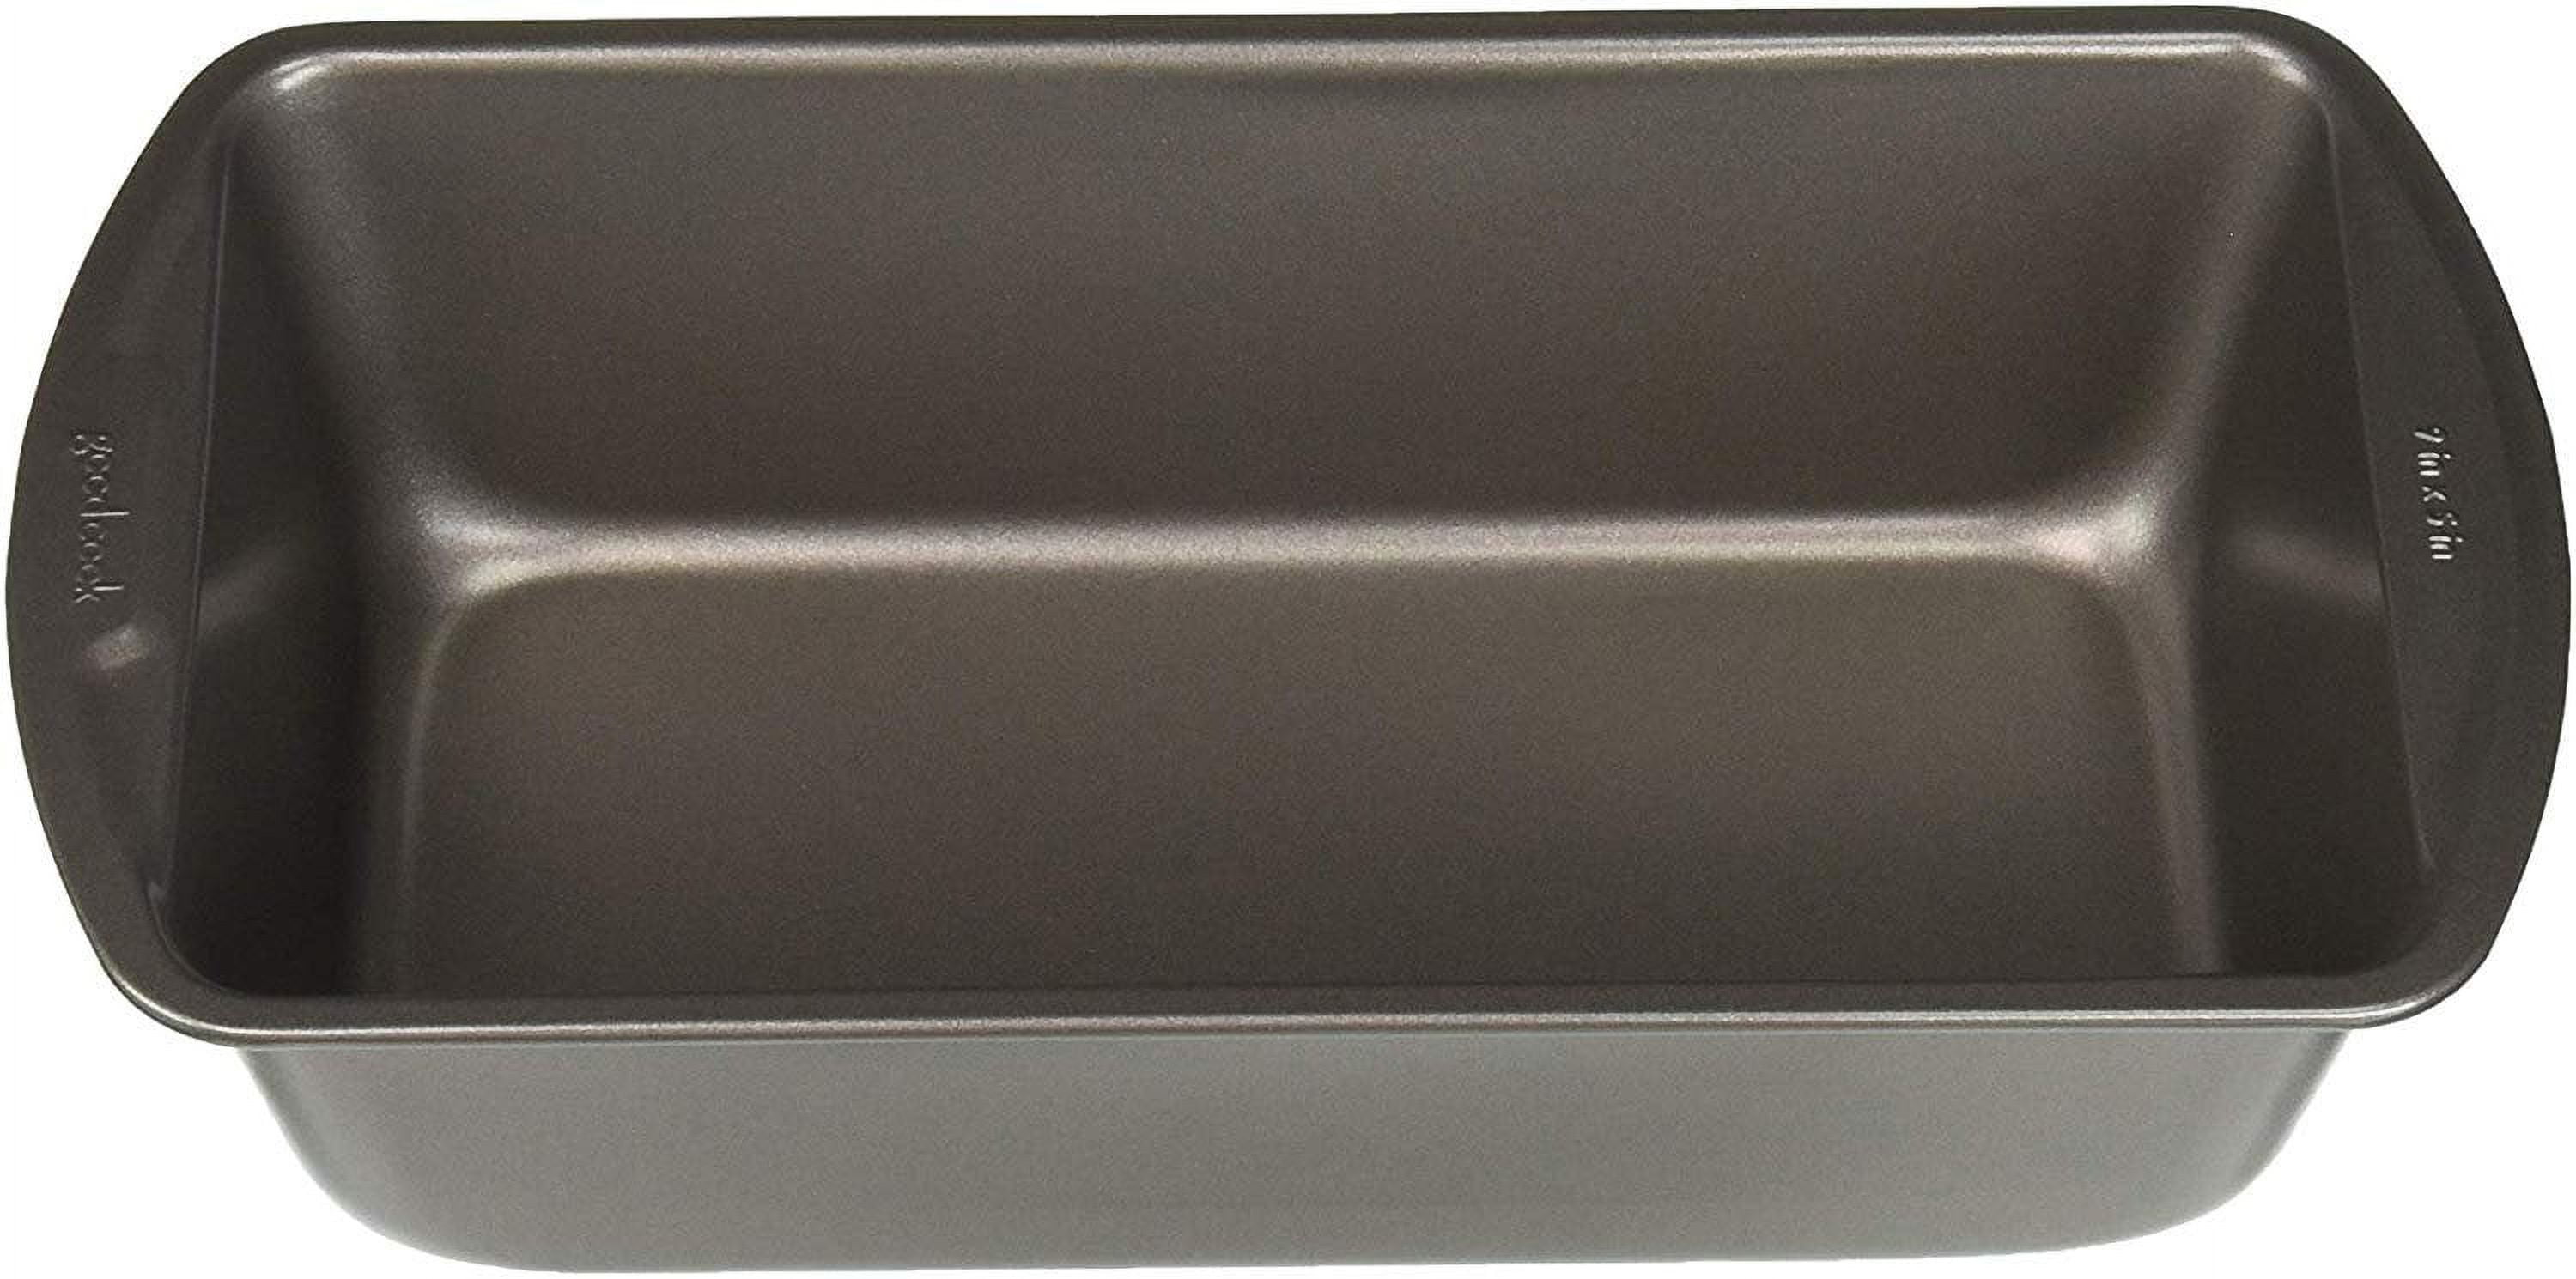 GoodCook BestBake MultiMeal Nonstick Textured Carbon Steel Divided Oblong  Pan, 11 x 14, Bronze - GoodCook